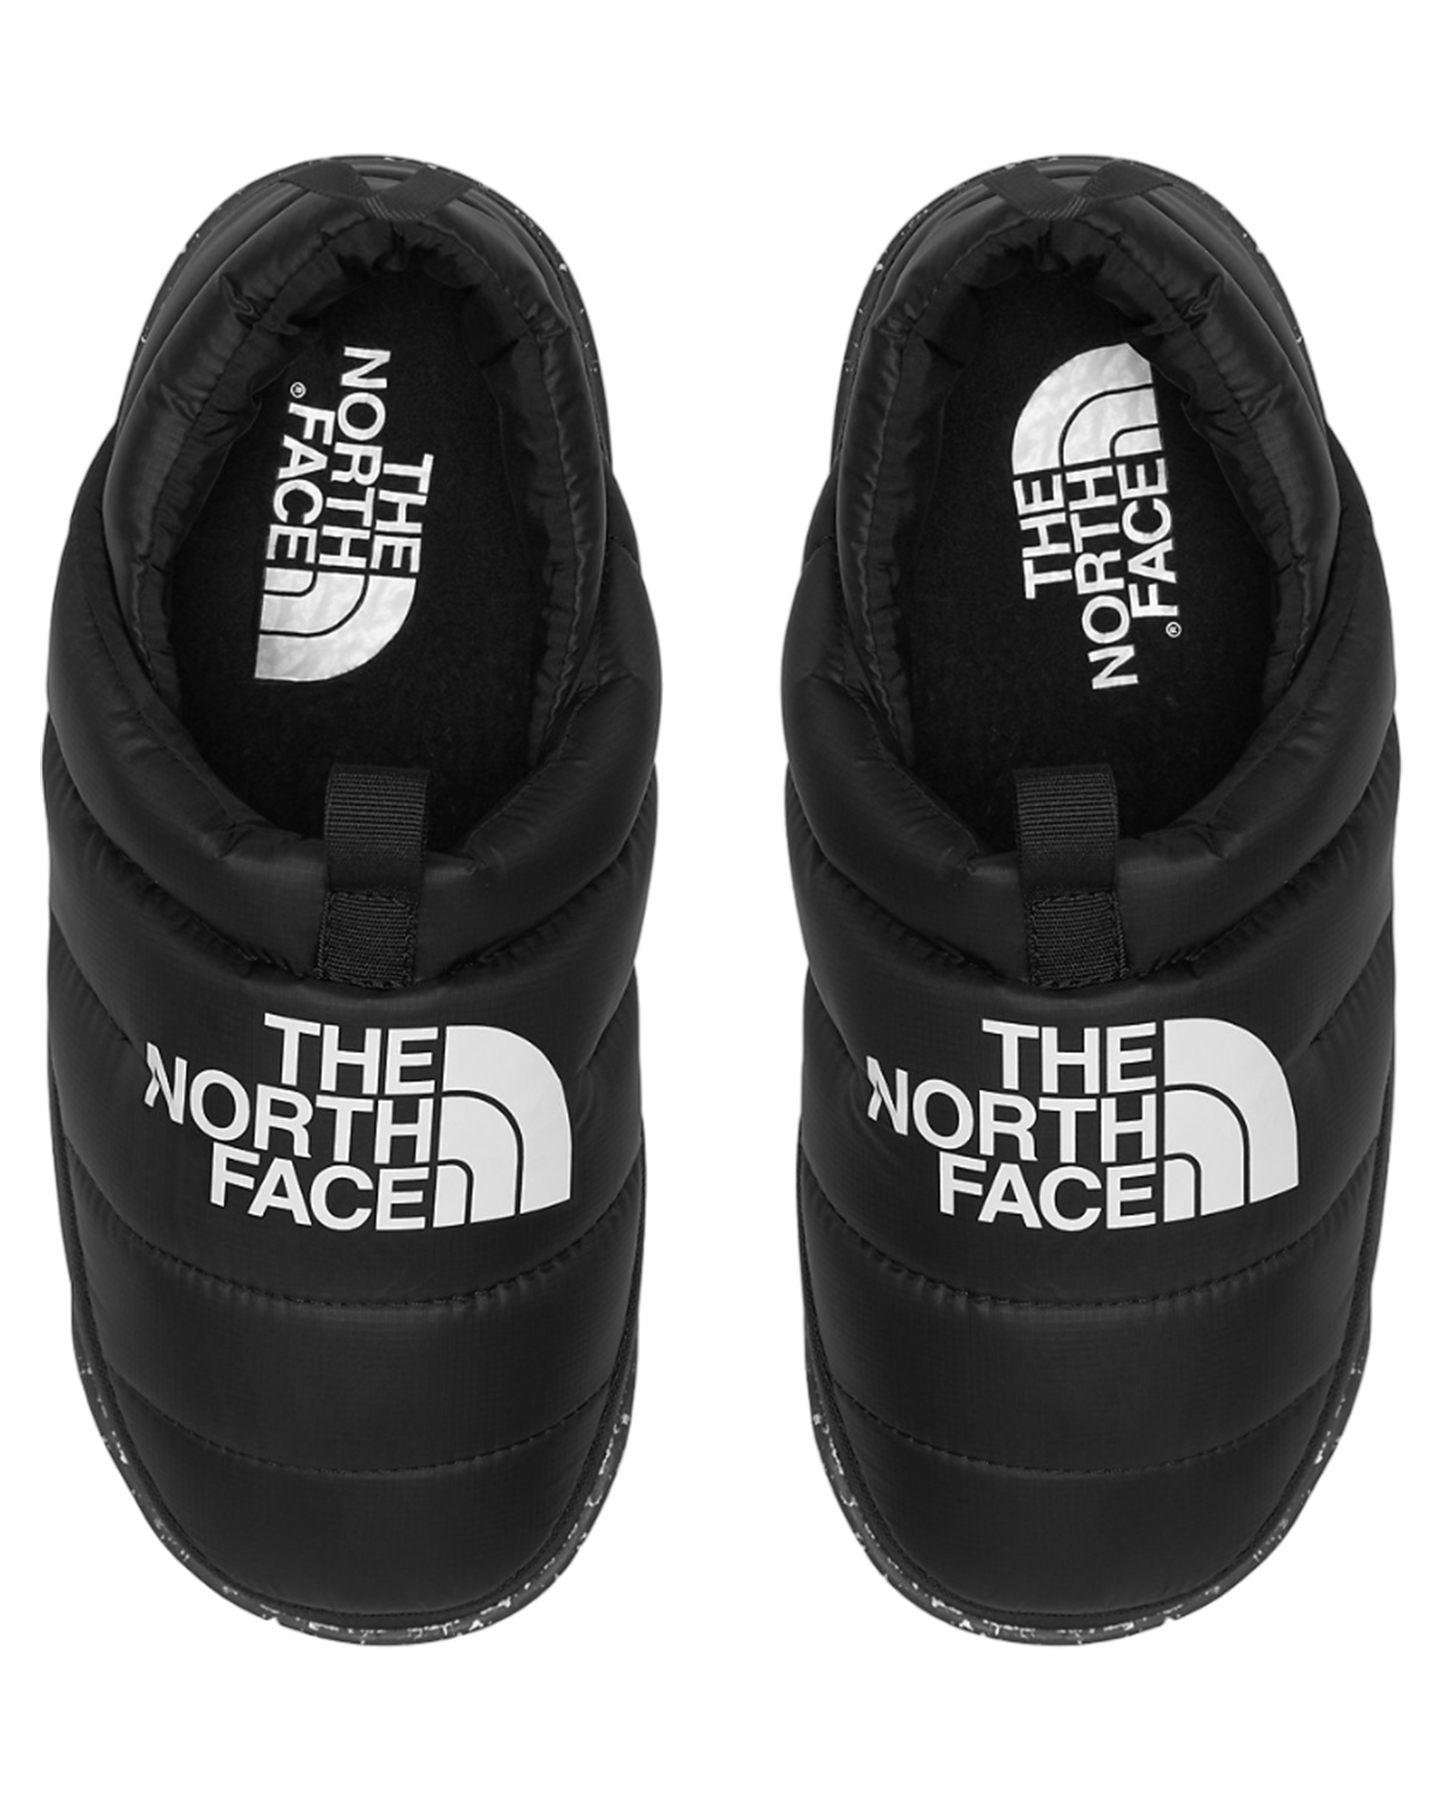 The North Face Women's Nuptse Mule - Tnf Black/Tnf White Apres Boots - SnowSkiersWarehouse